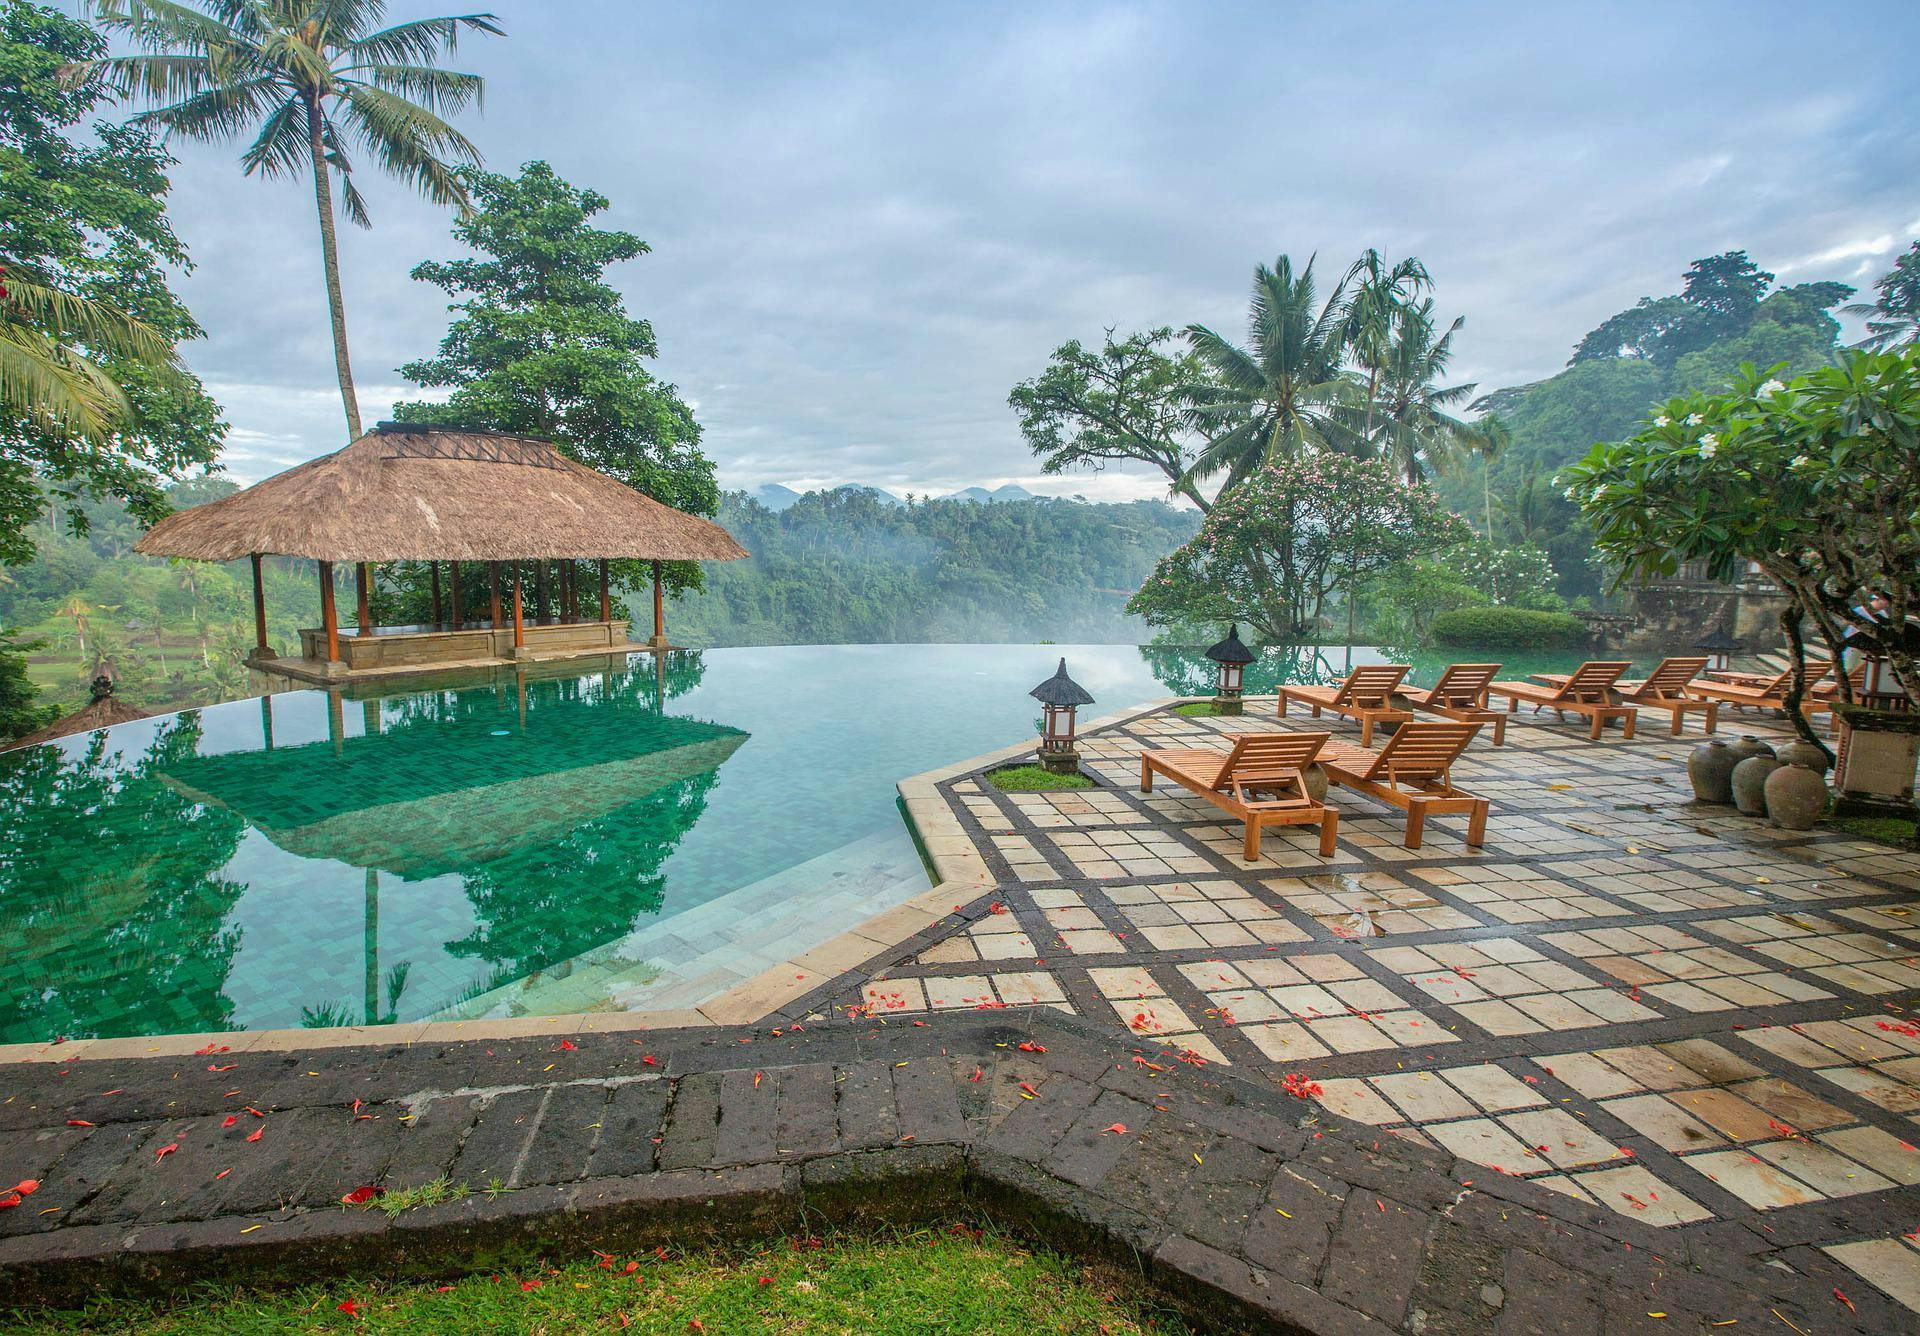 Real Estate Management in Bali